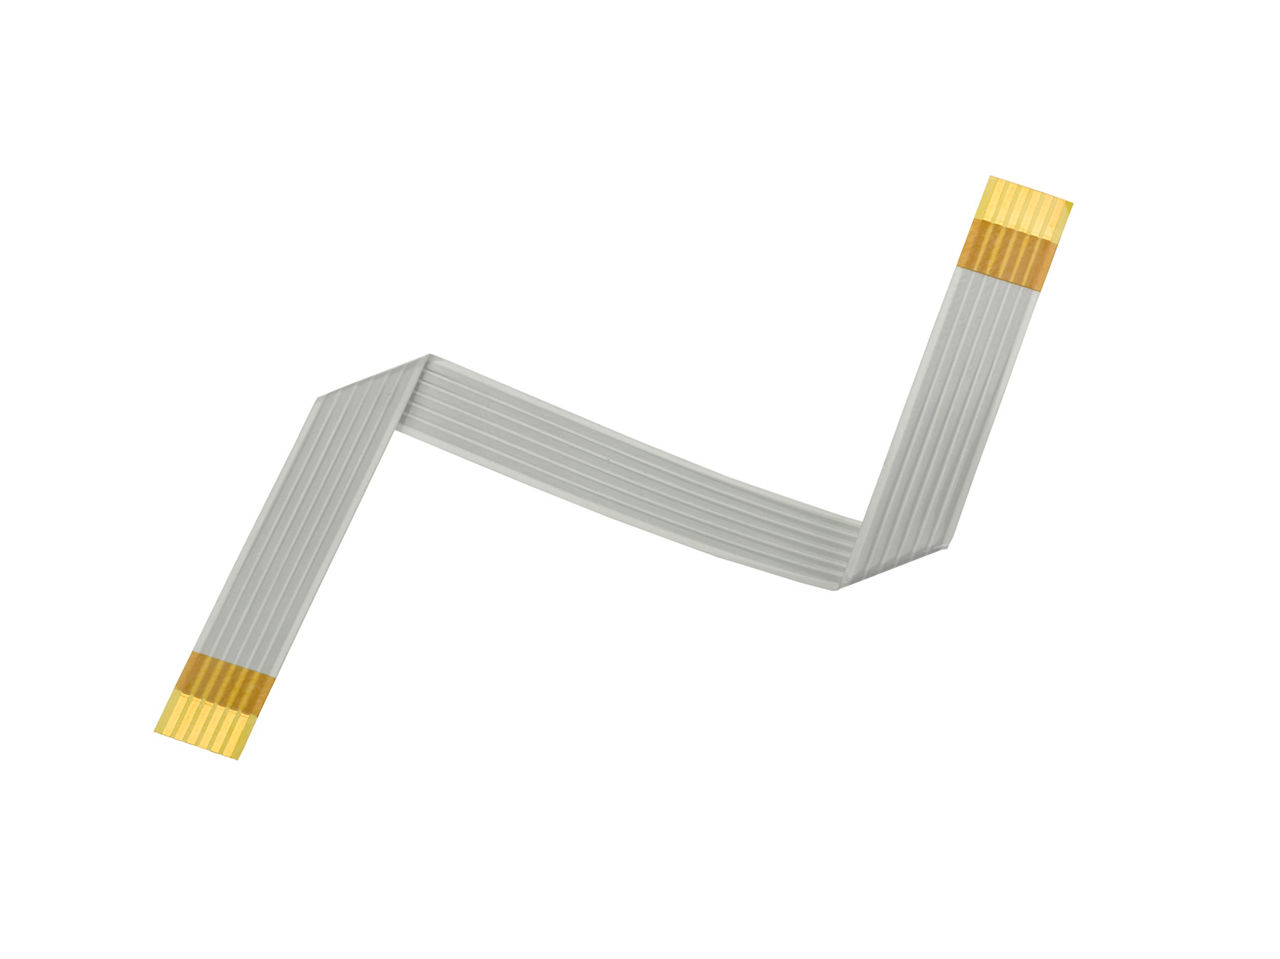 FFC (Flat Flexible Cable) - Lorom